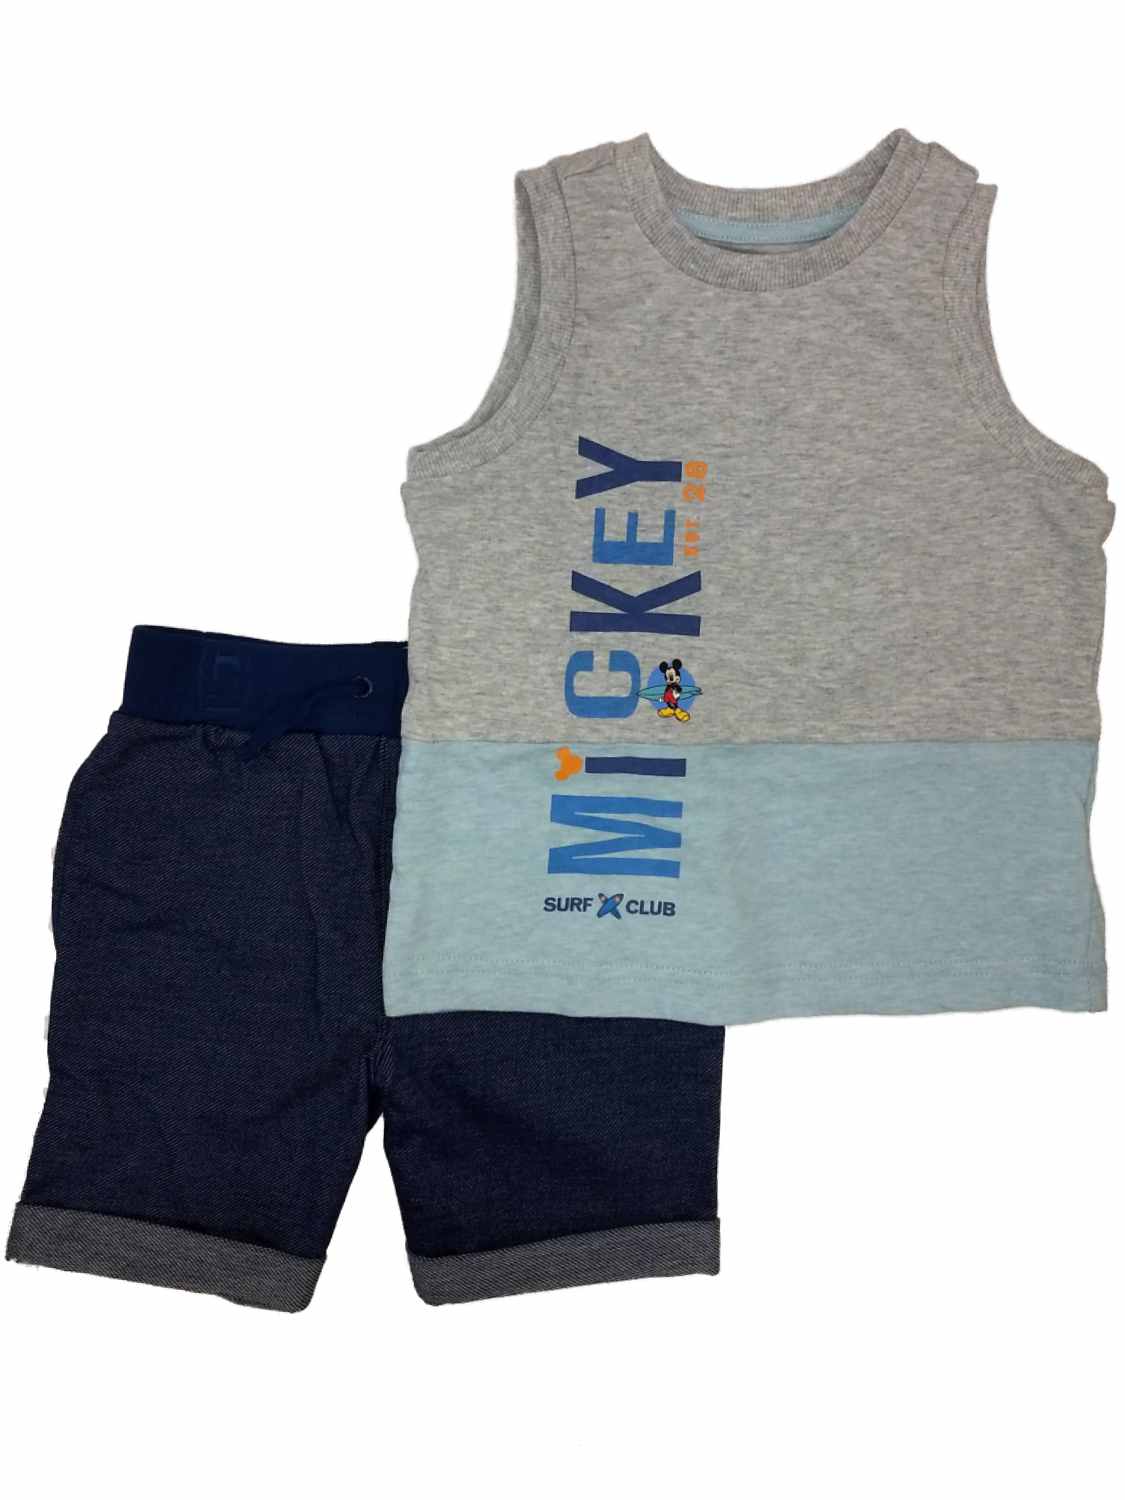 Disney Boys Mickey Mouse Surf Club Outfit Tank Top Shirt & Shorts Set